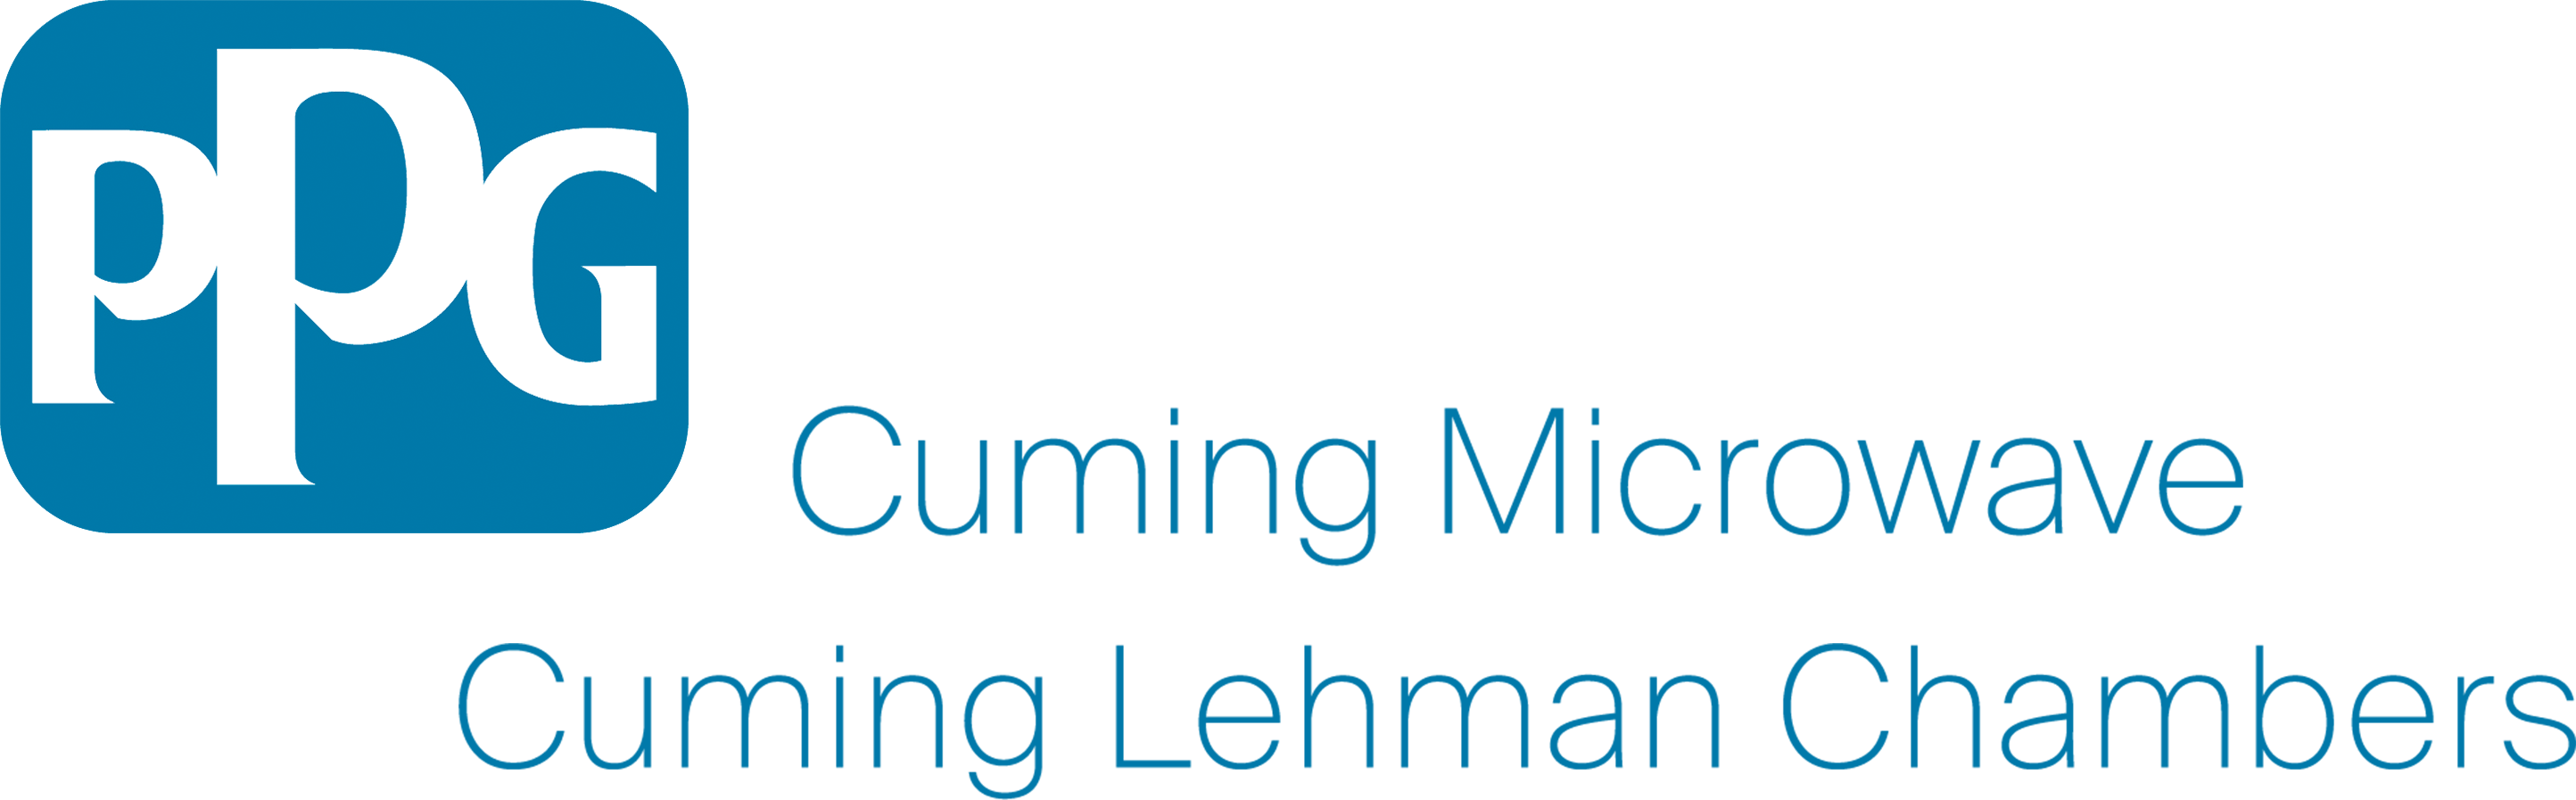 PPG Cuming Microwave & Cuming Lehman Chambers